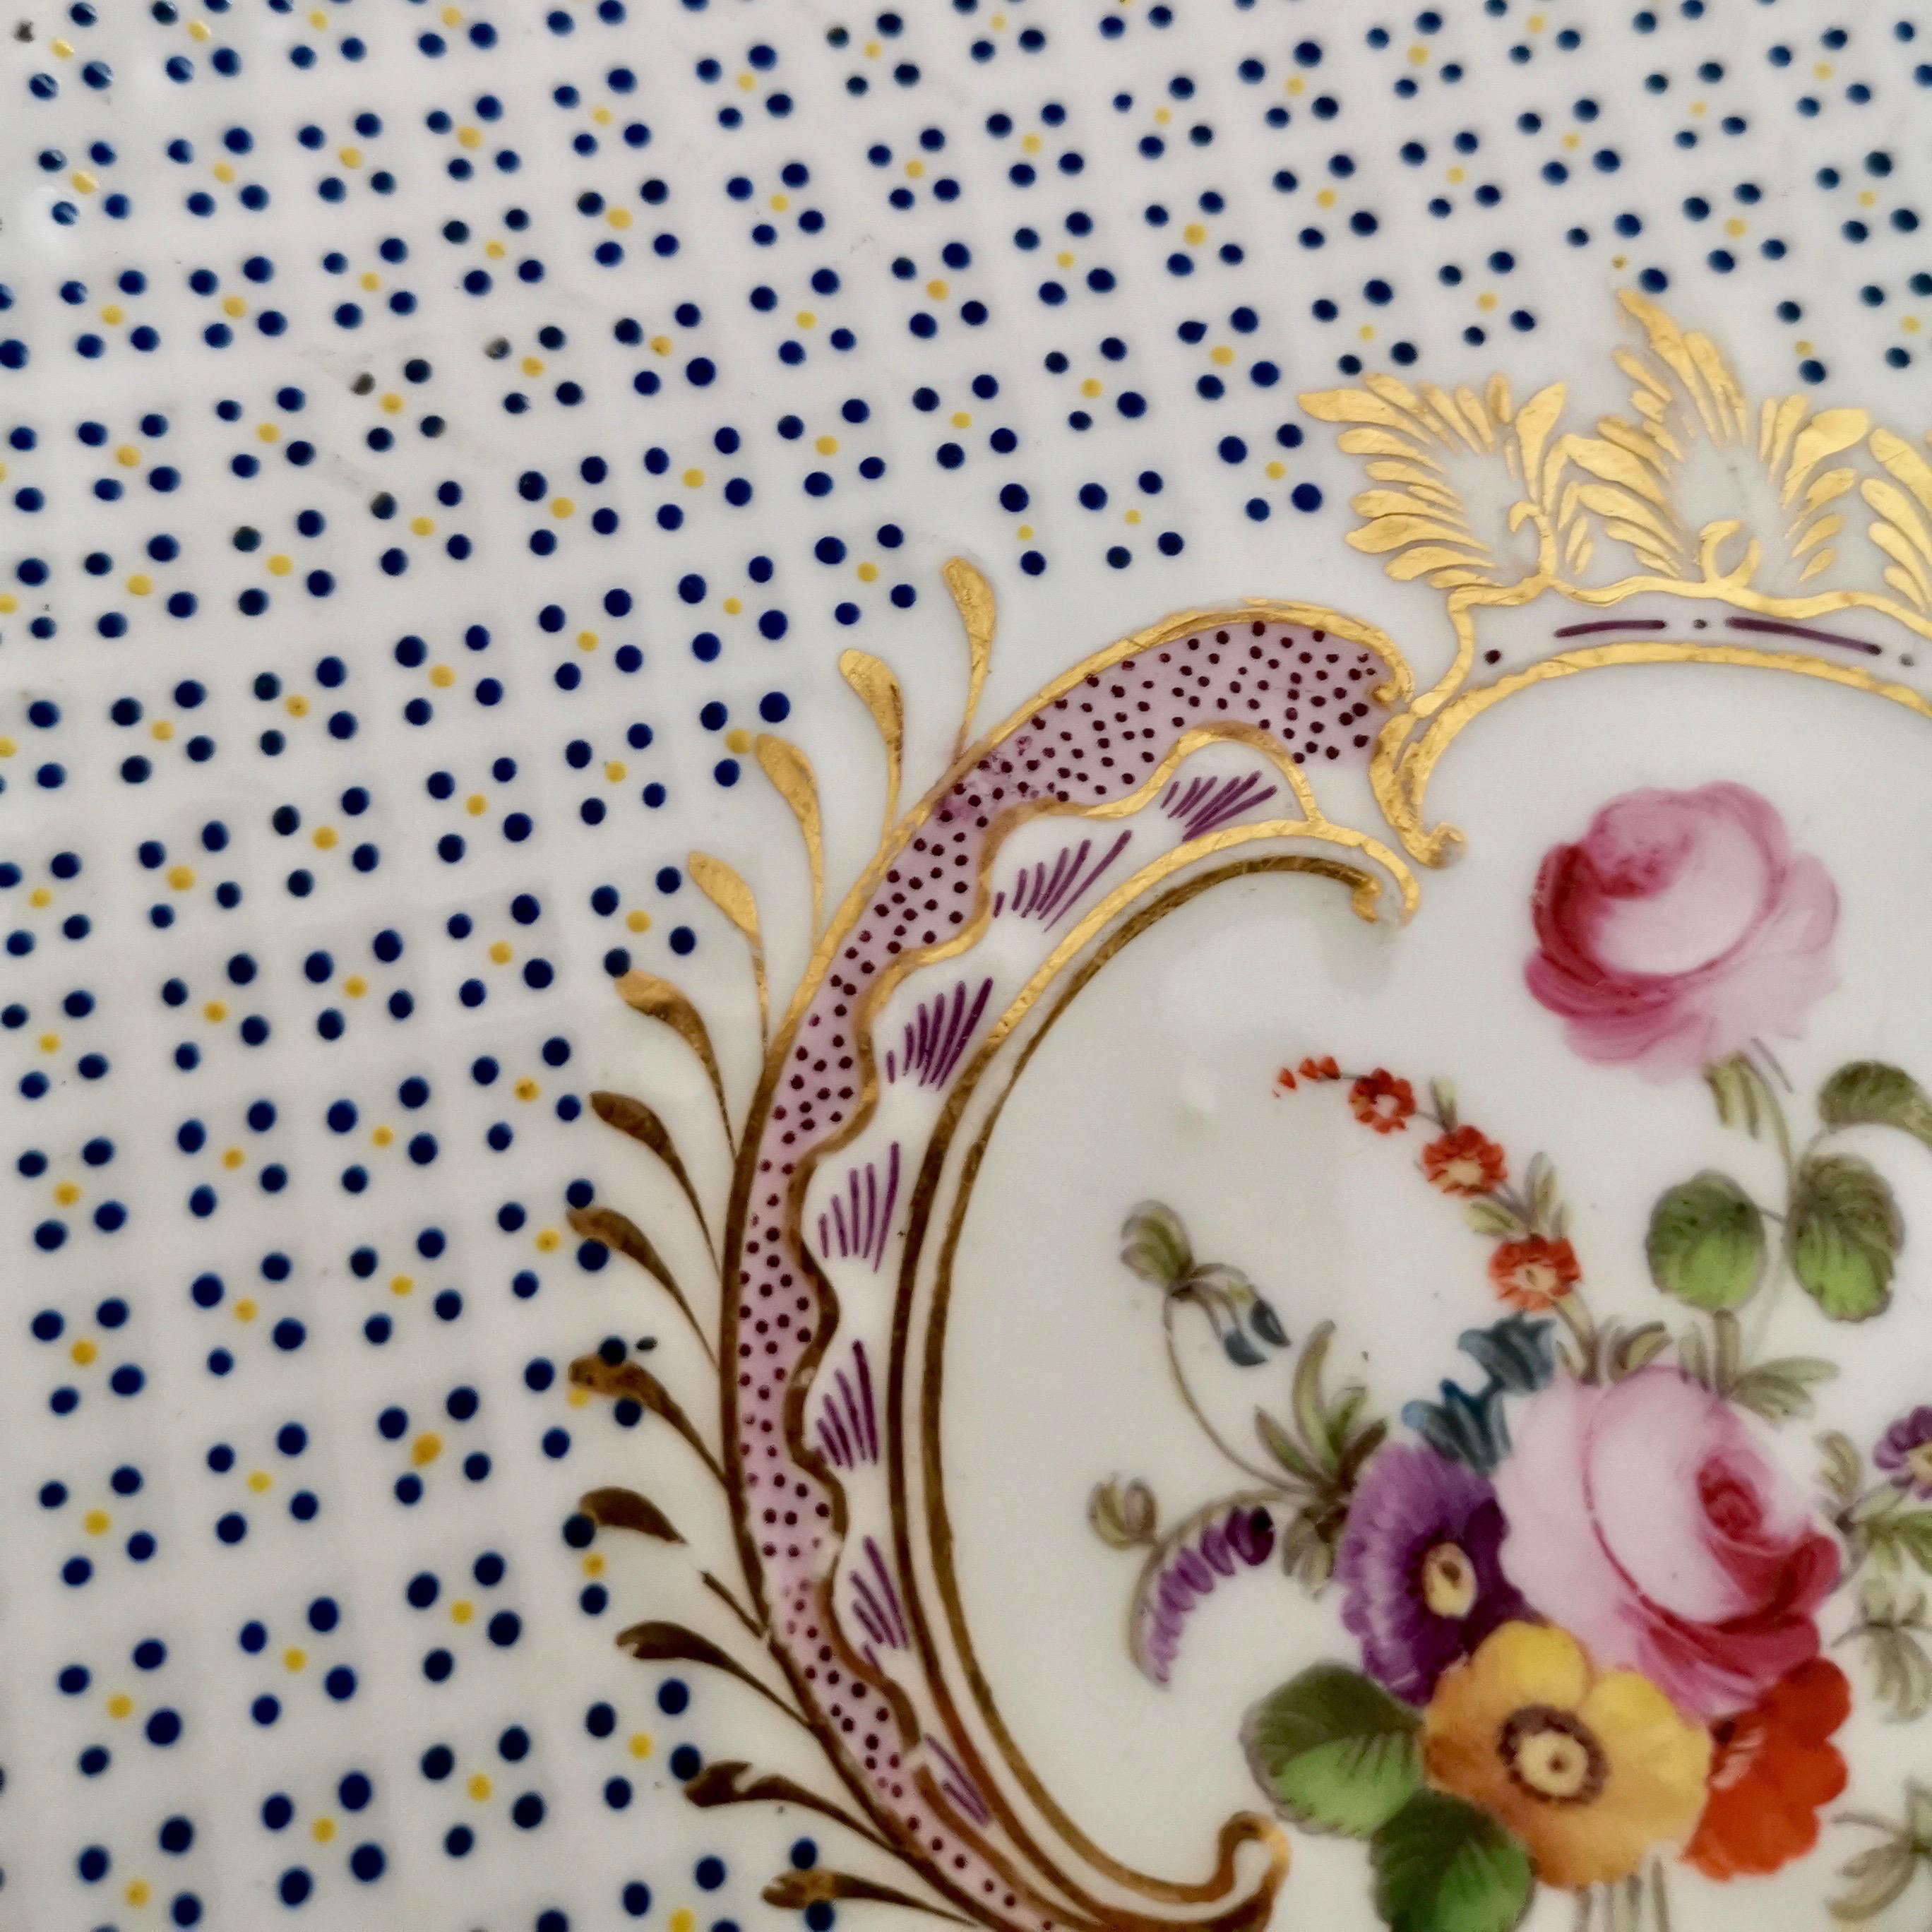 Coalport Porcelain Plate, Moulded Surface, White, Blue, Flowers, Regency ca 1820 5